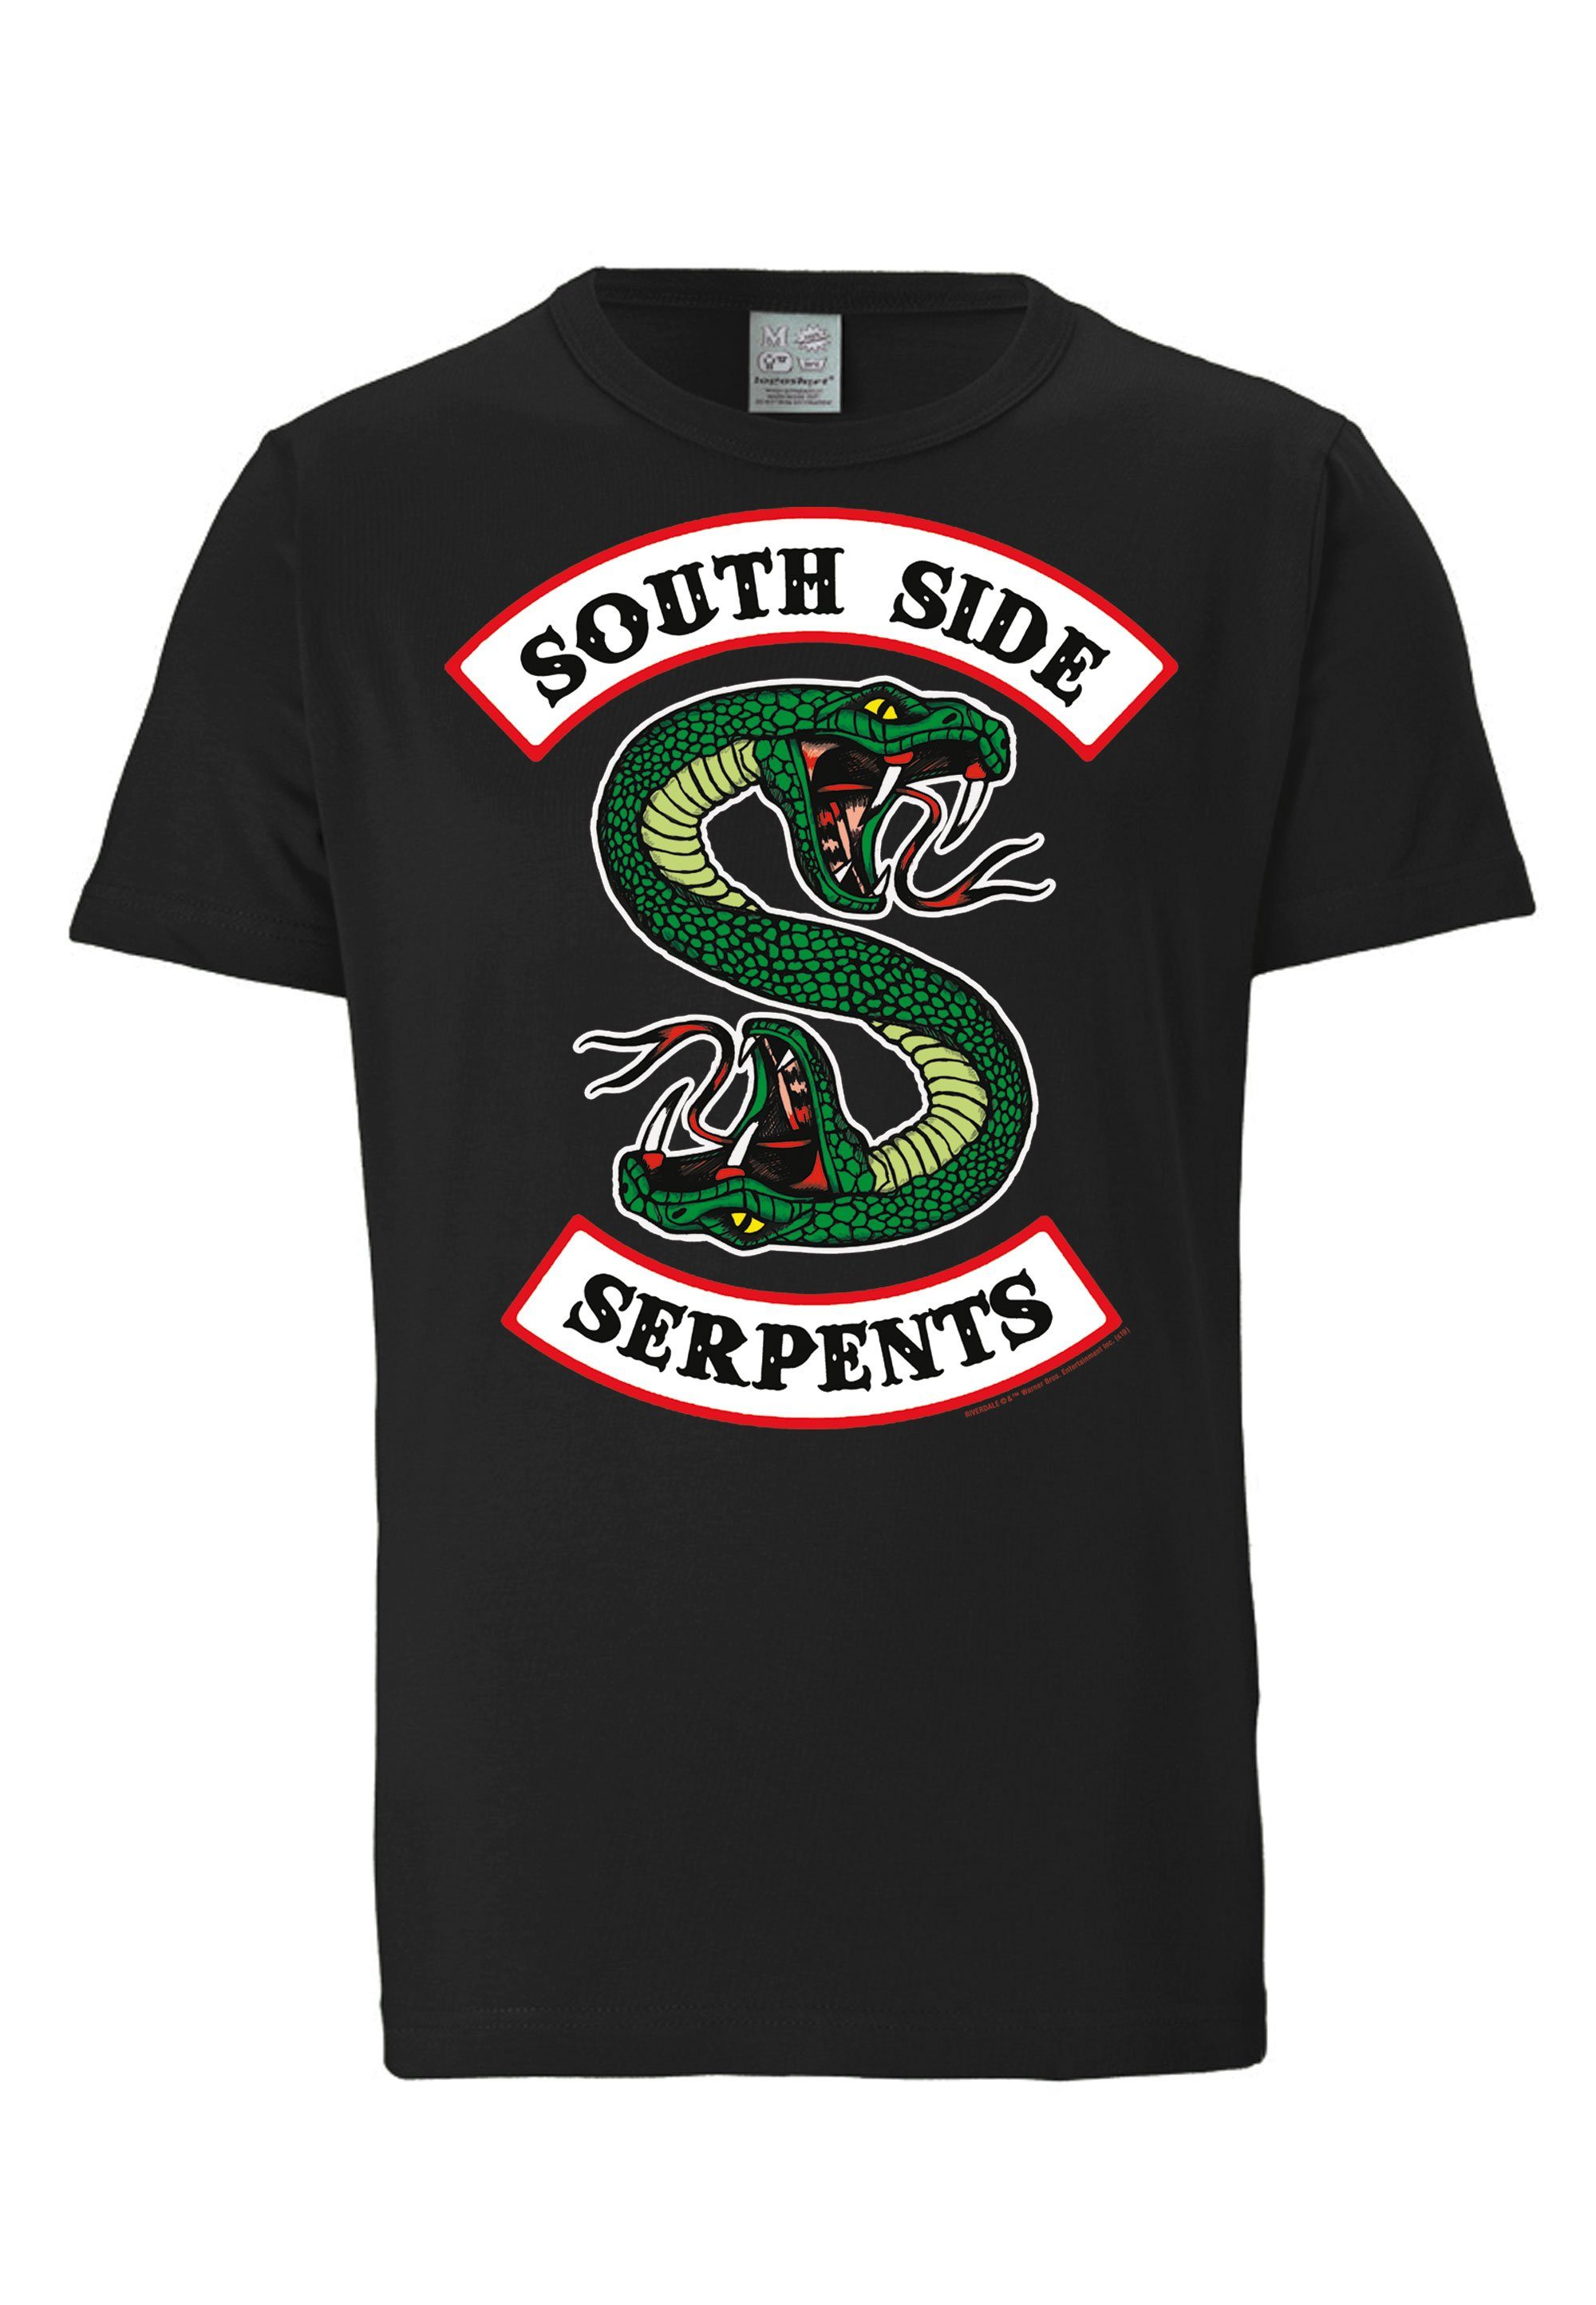 South Side Side Serpents mit - T-Shirt South LOGOSHIRT Riverdale Serpents-Motiv